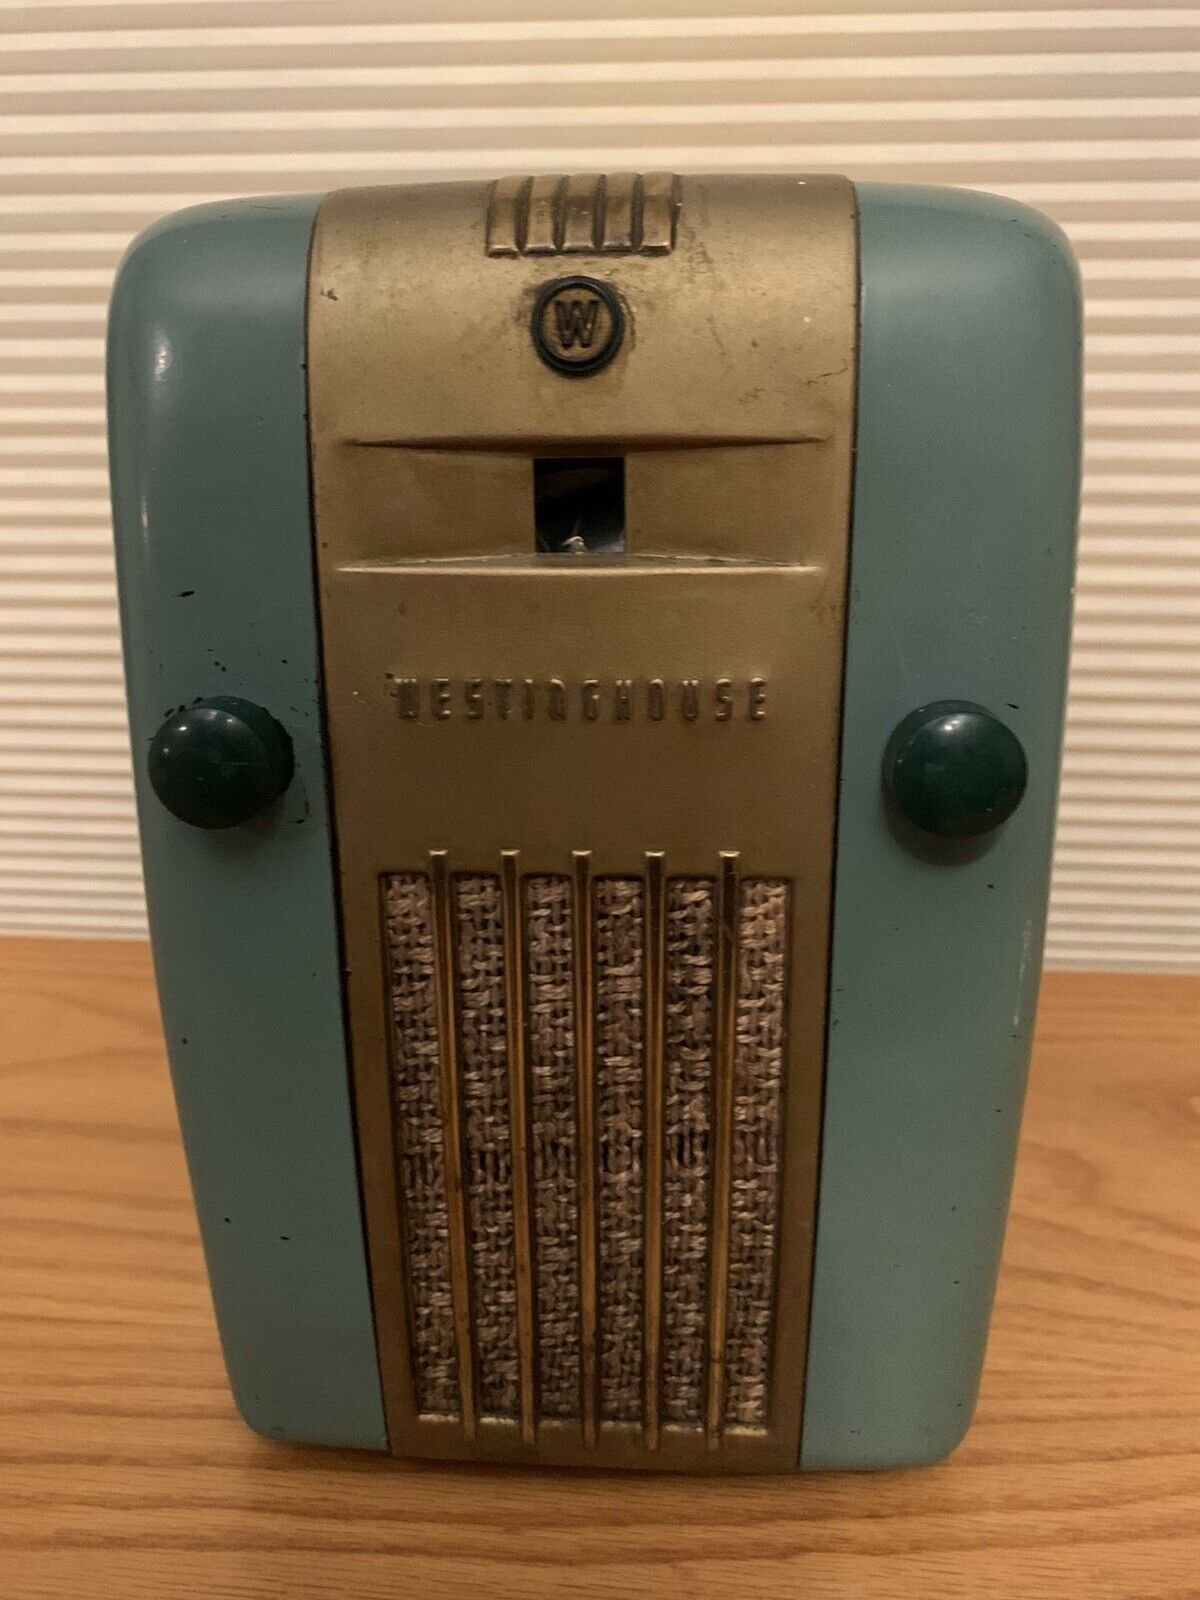 Westinghouse H-125 “Little Jewel” “Refrigerator”1940s Vintage Radio Not Working